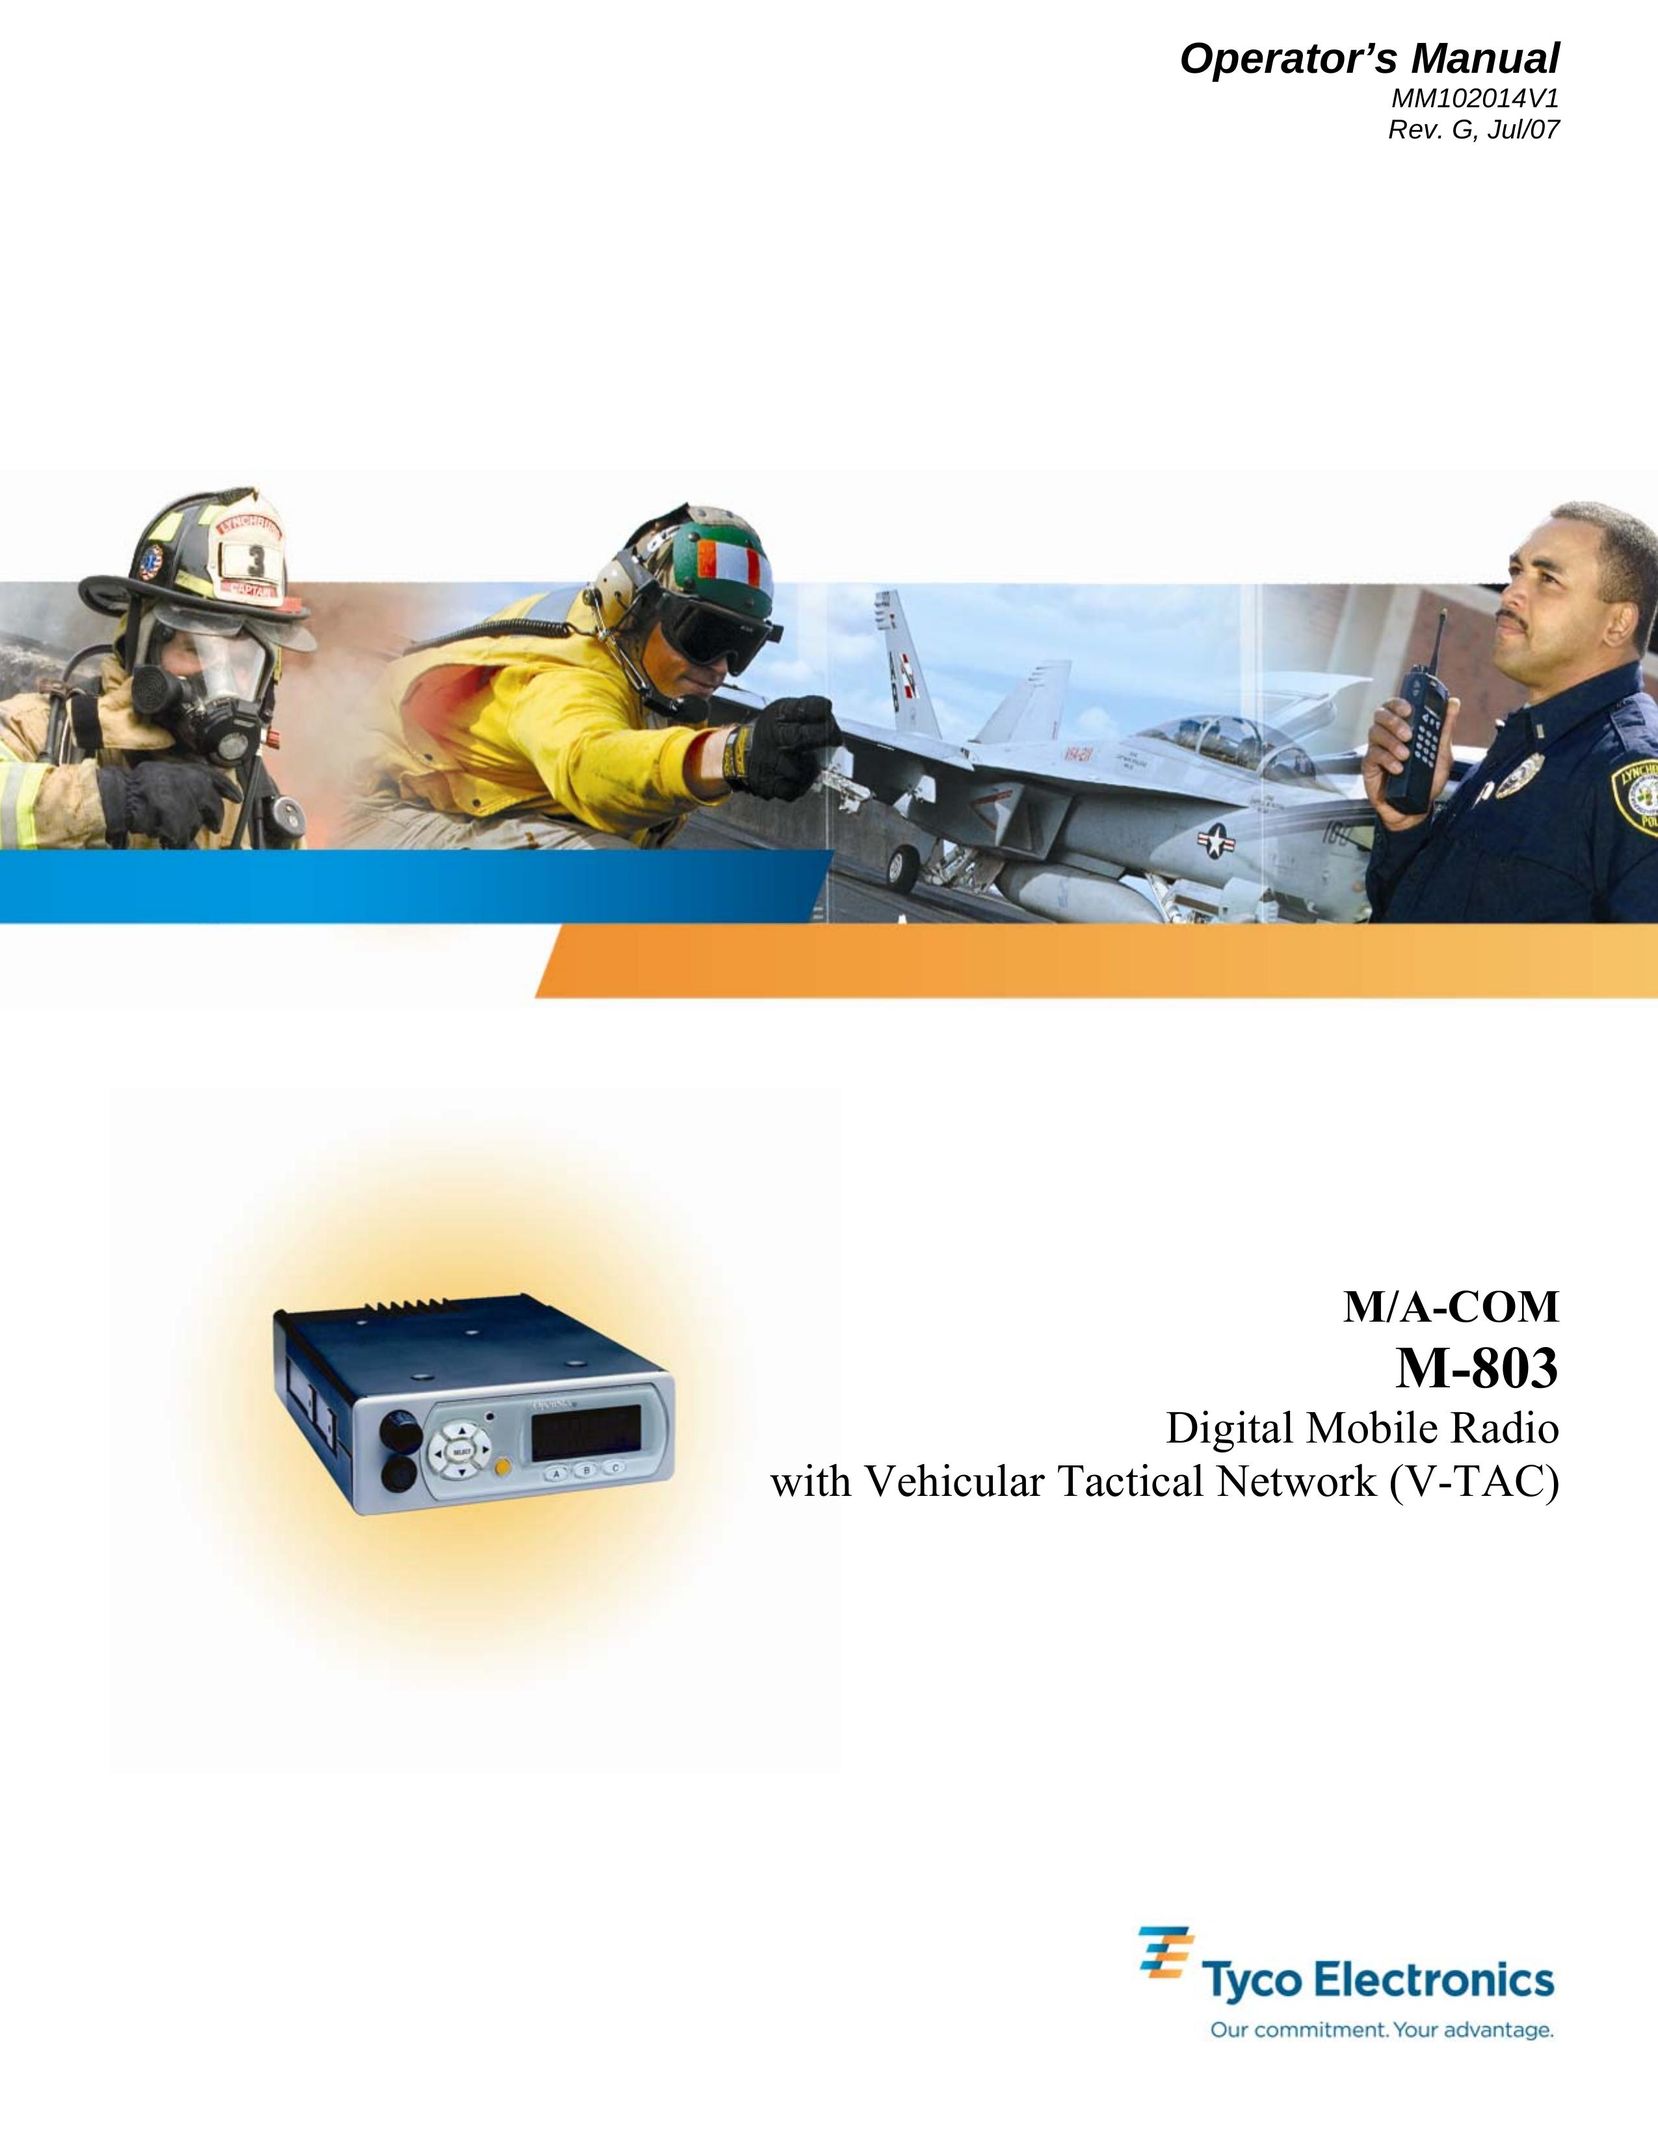 Tyco Electronics MM102014V1 Radio User Manual